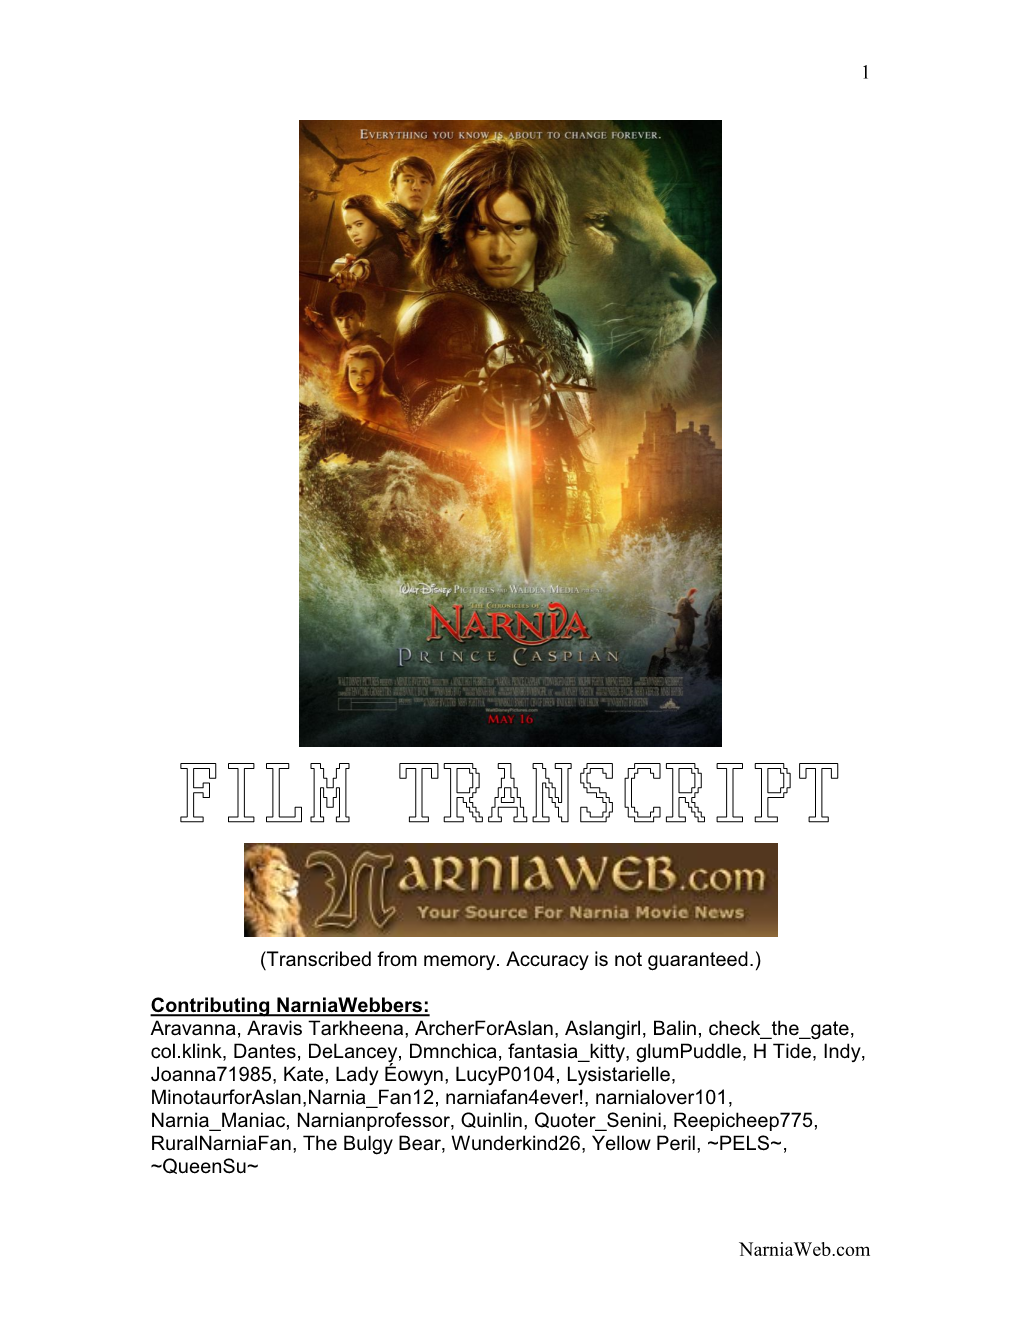 Prince-Caspian-Movie-Script.Pdf